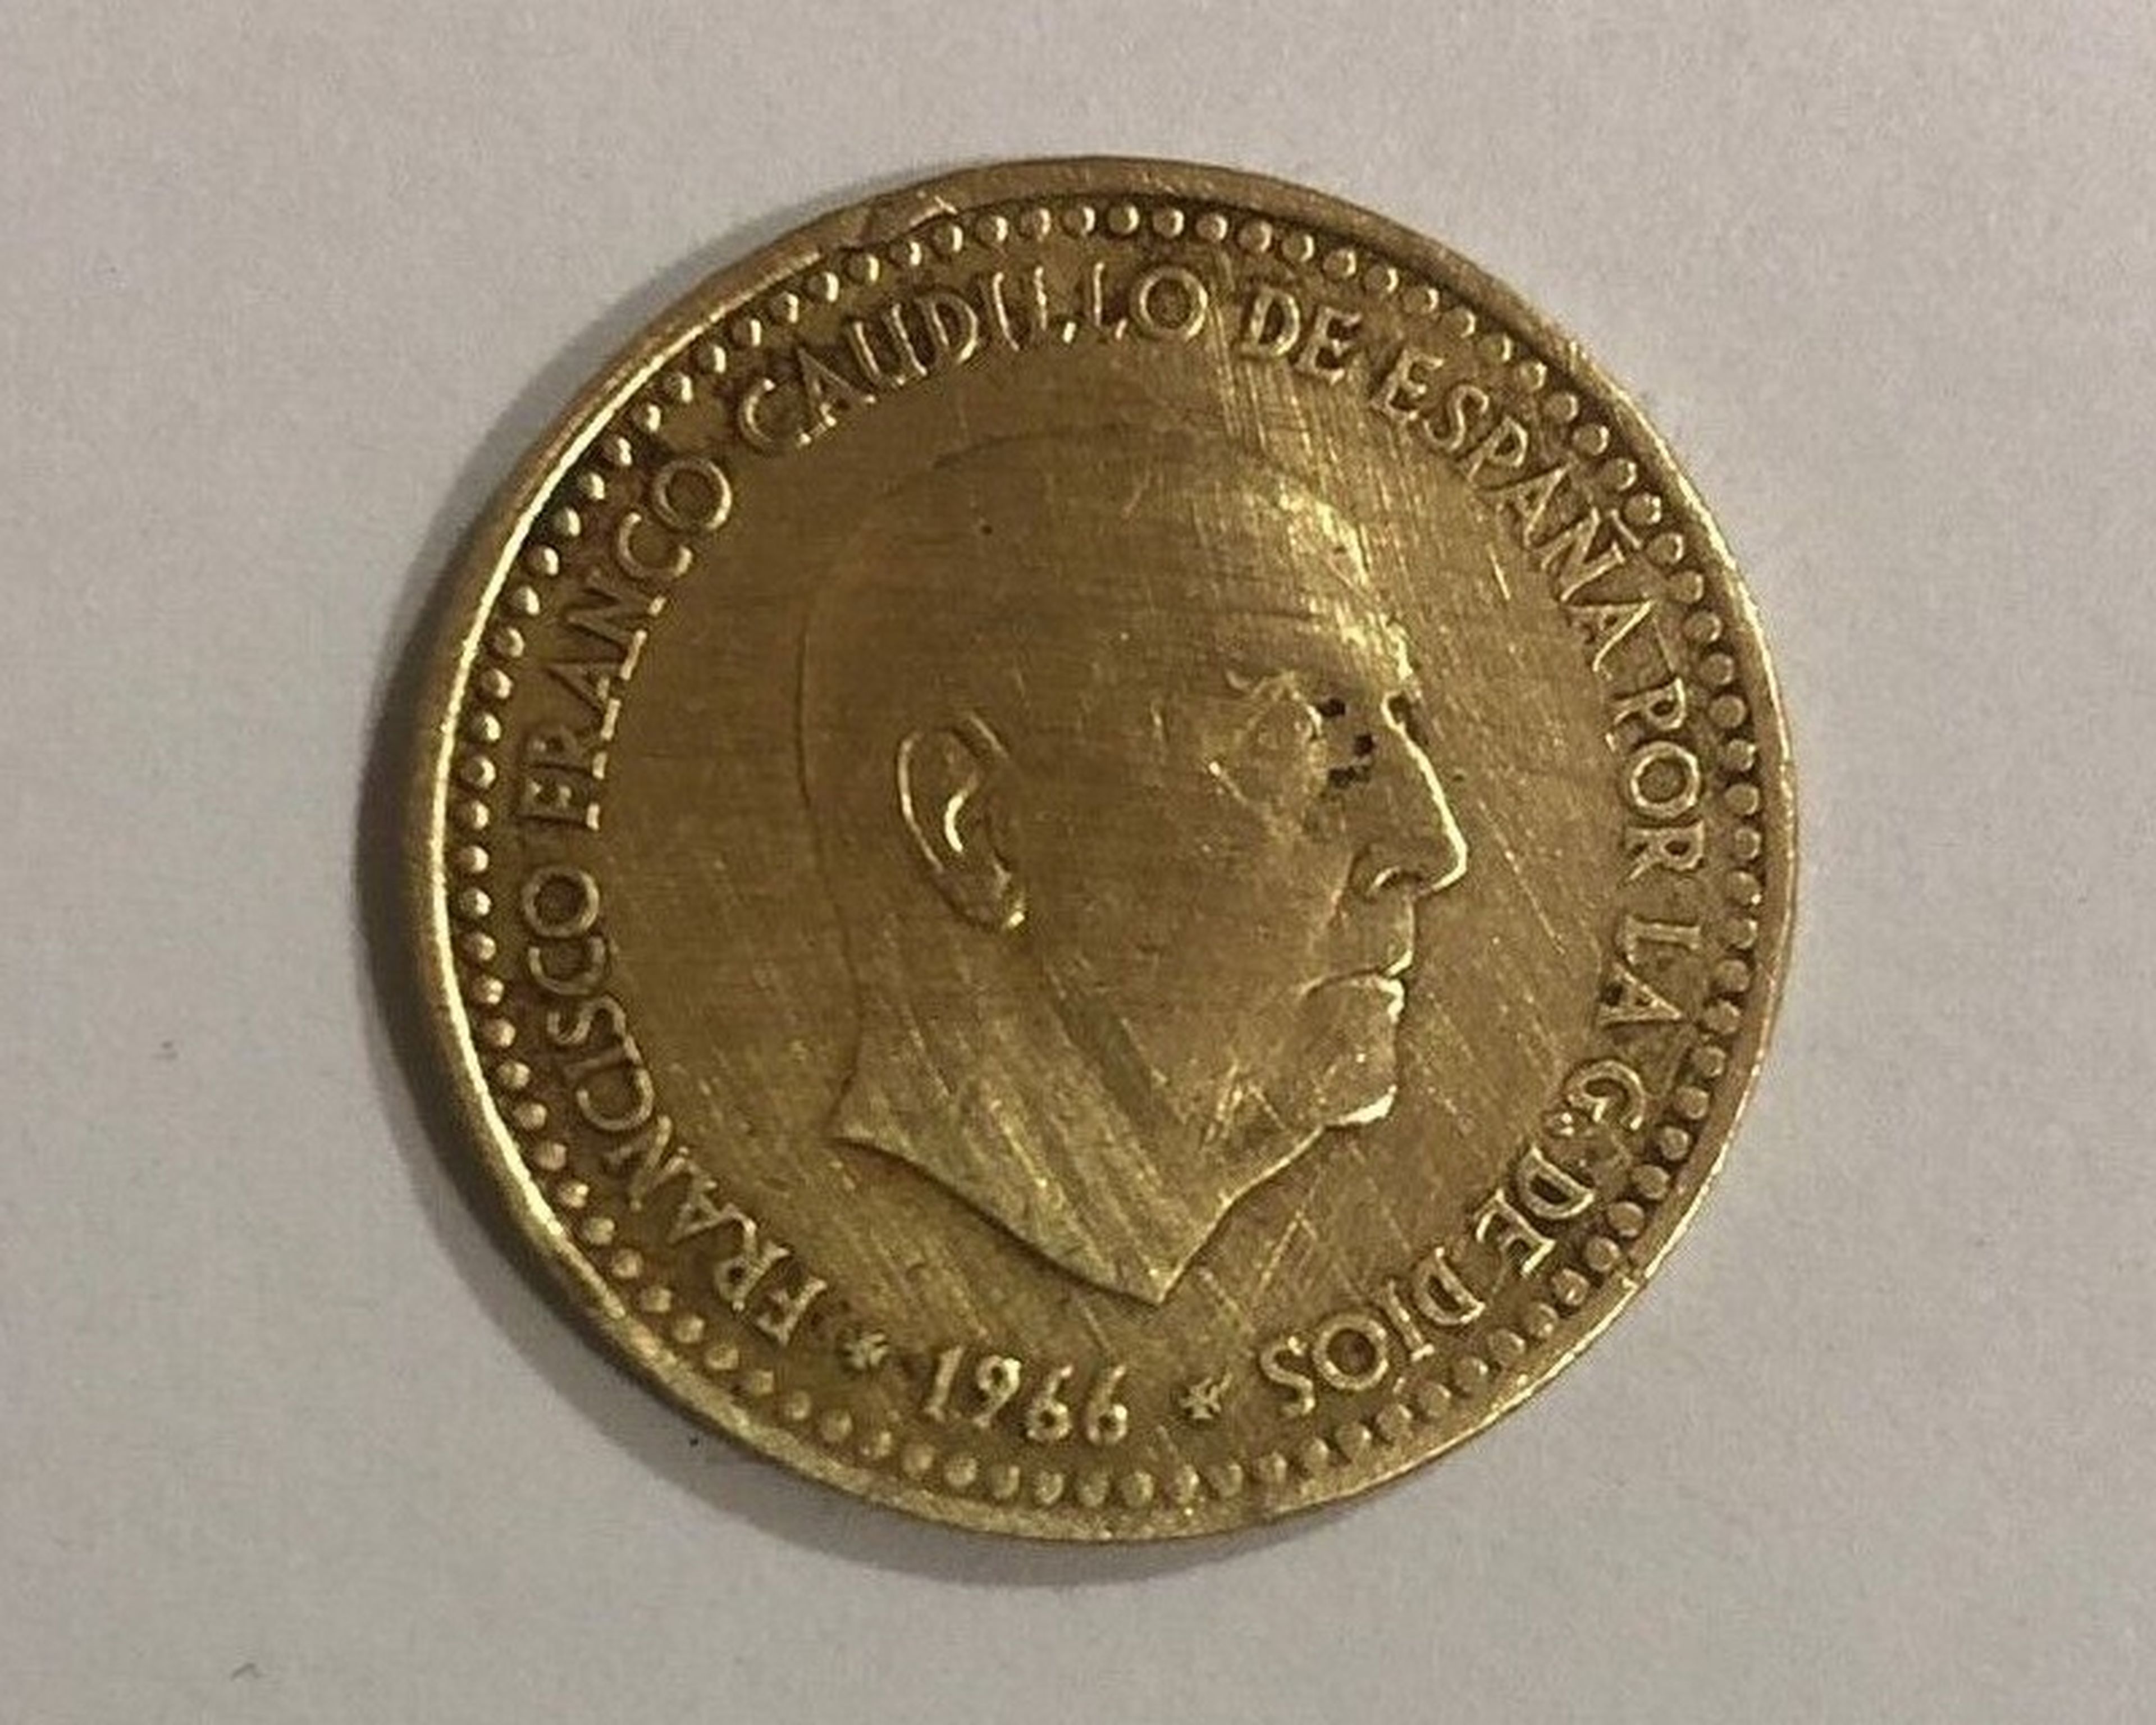 Moneda de 1 peseta de Franco